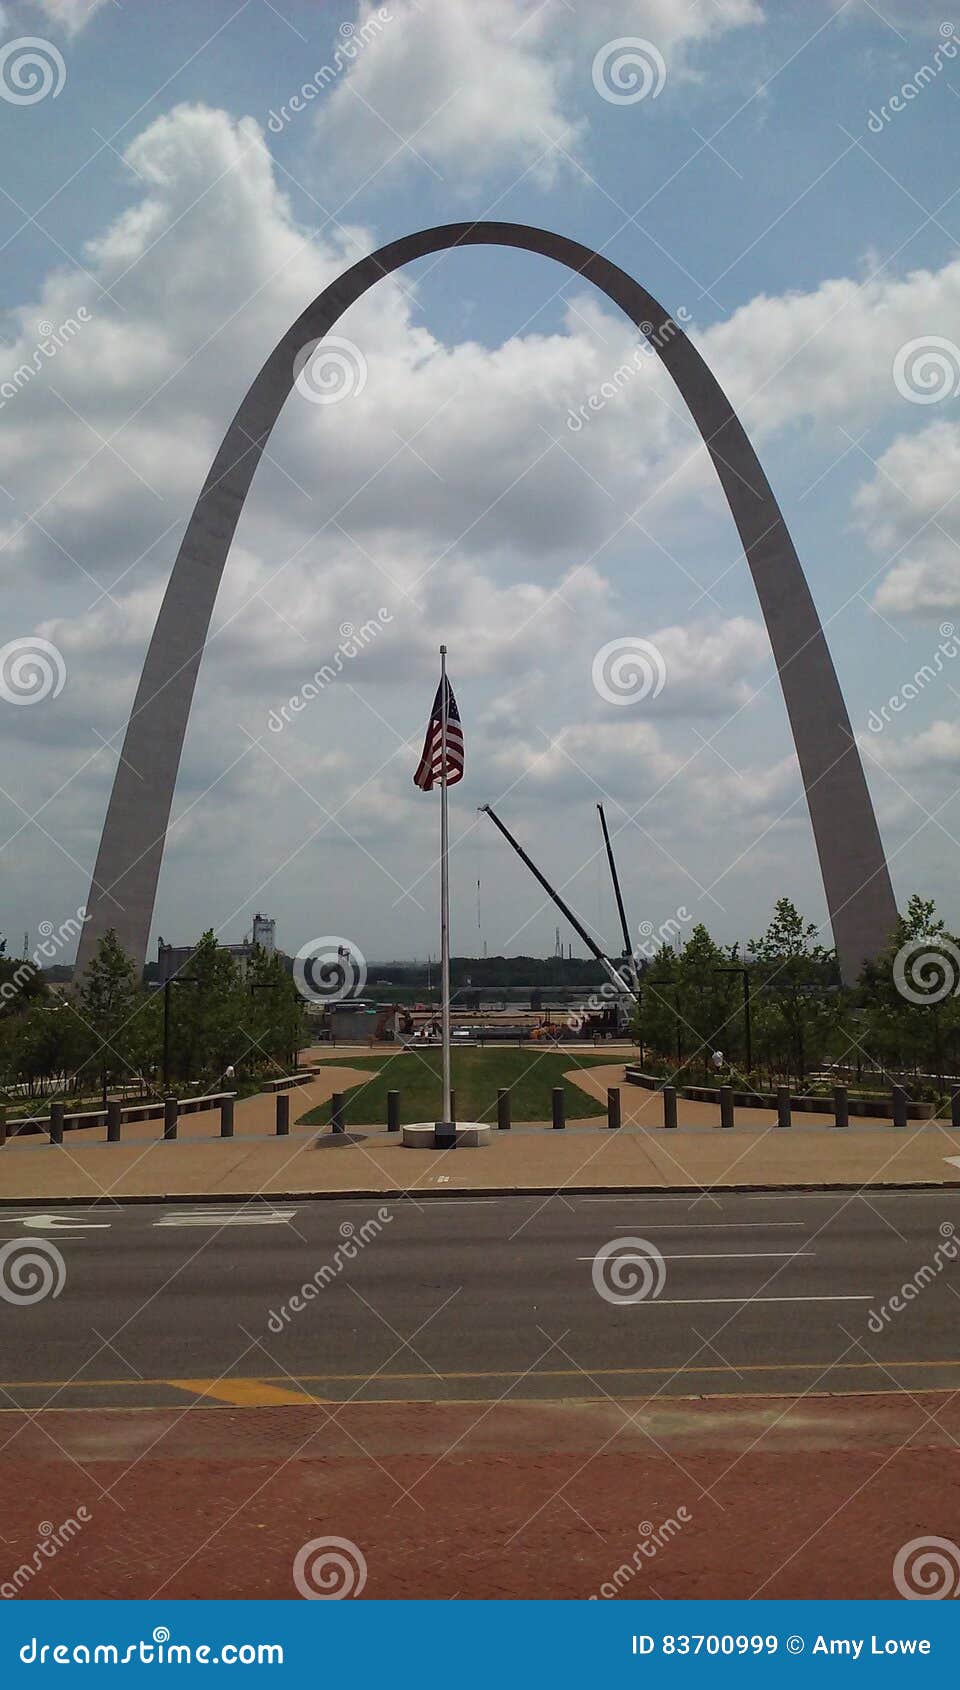 St. Louis Arch In St. Louis, Missouri Stock Image - Image of flag, landmark: 83700999